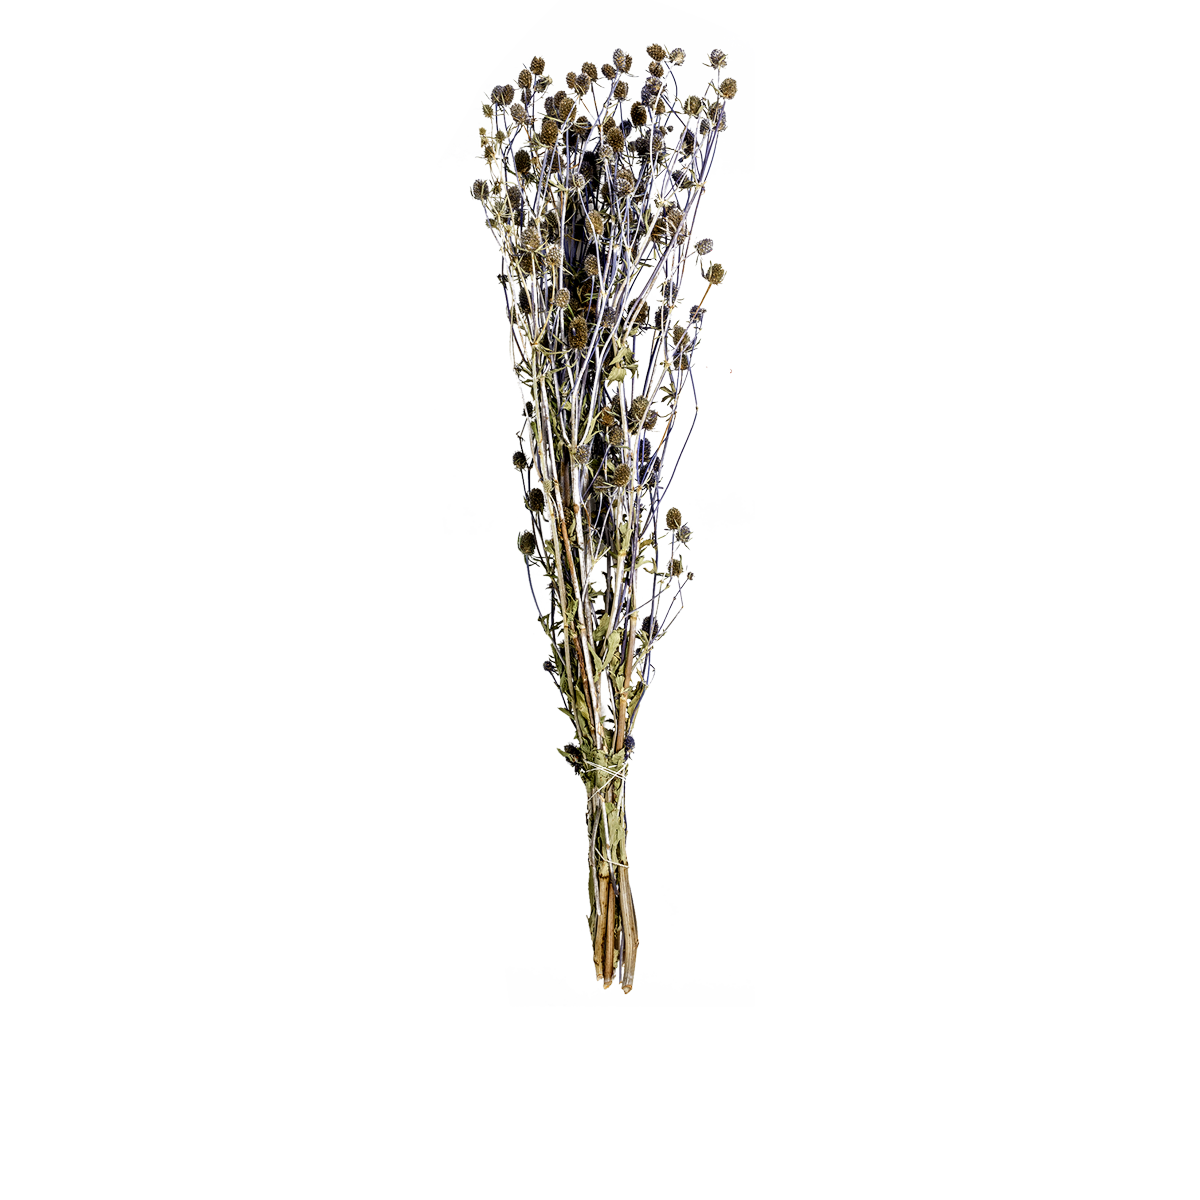 Blue Eryngium Alpine Sea Holly Dried Botanical